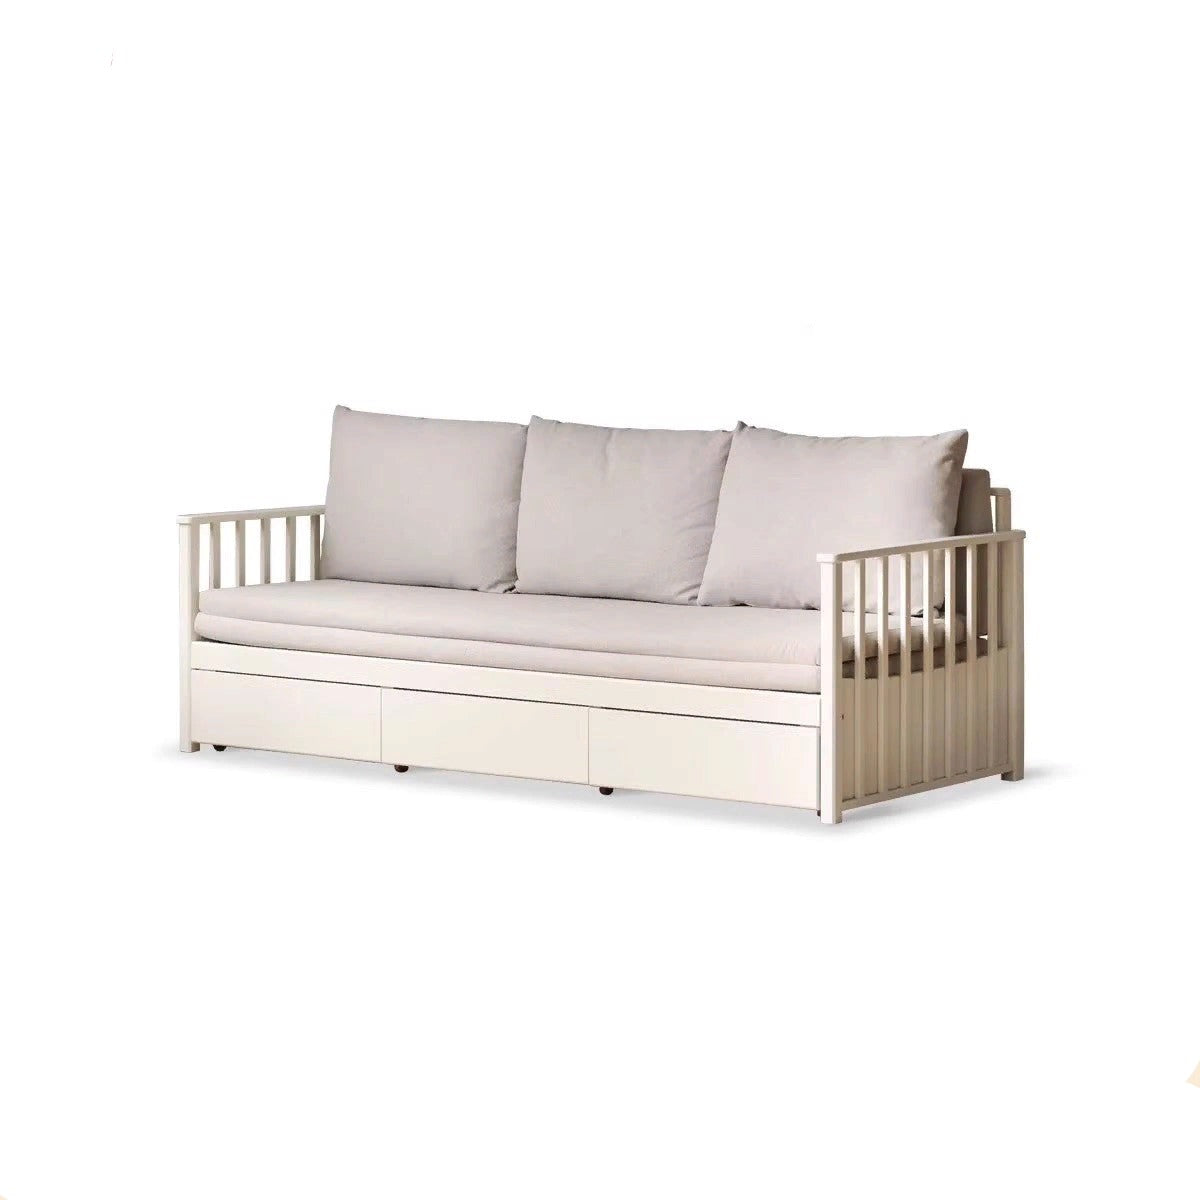 Poplar Solid Wood Storage Sofa Bed, White Cream+